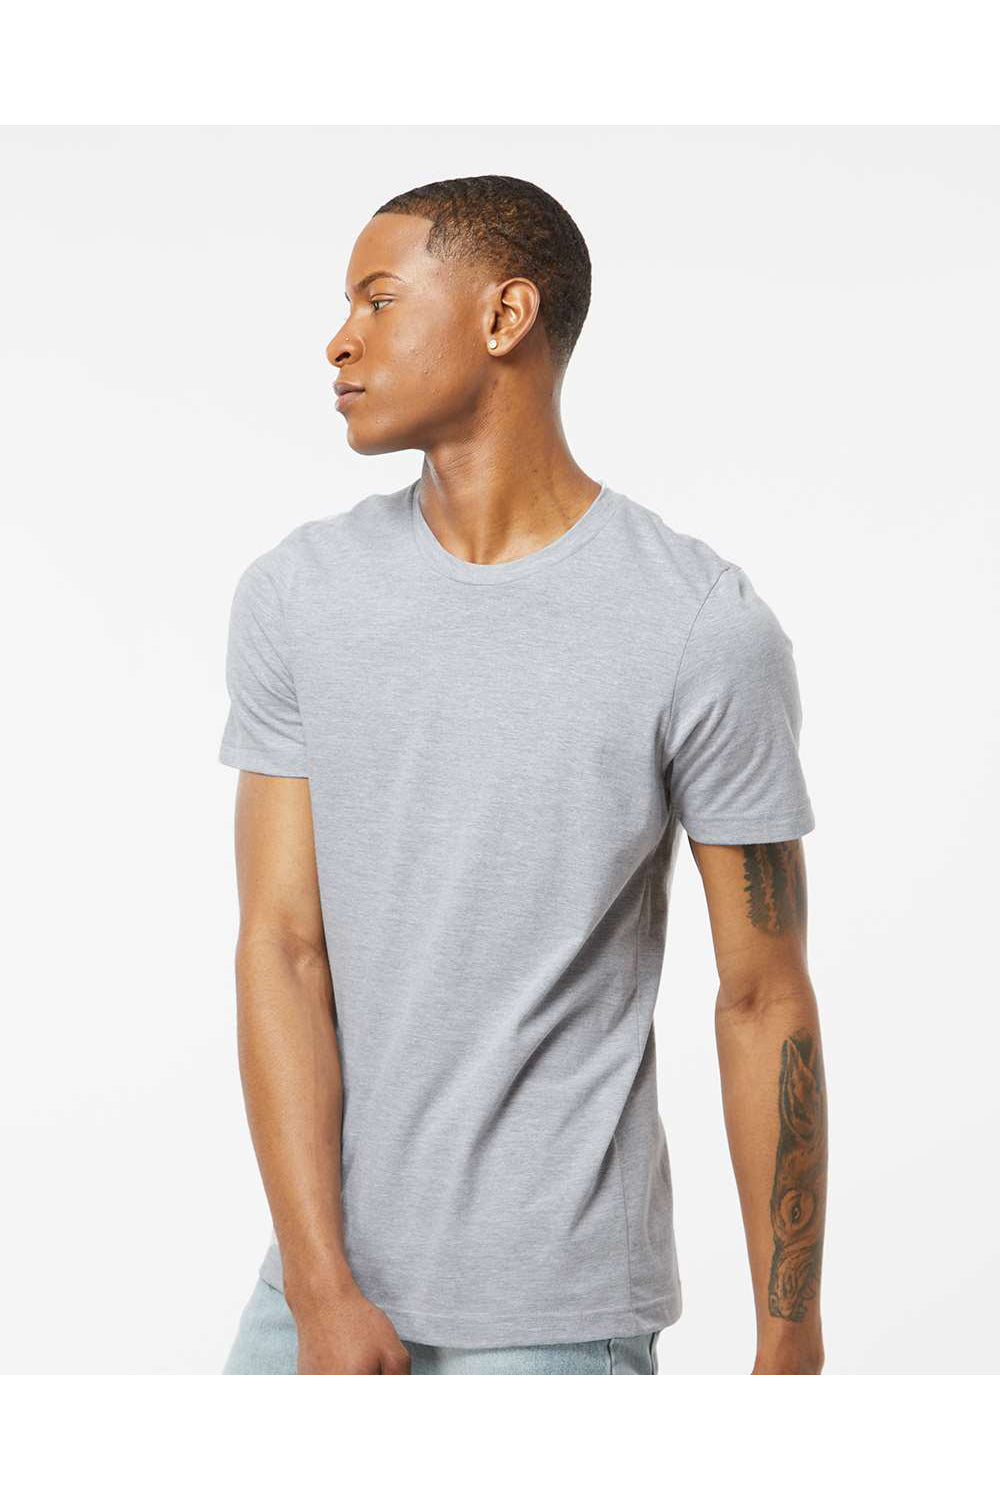 Tultex 502 Mens Premium Short Sleeve Crewneck T-Shirt Heather Grey Model Side